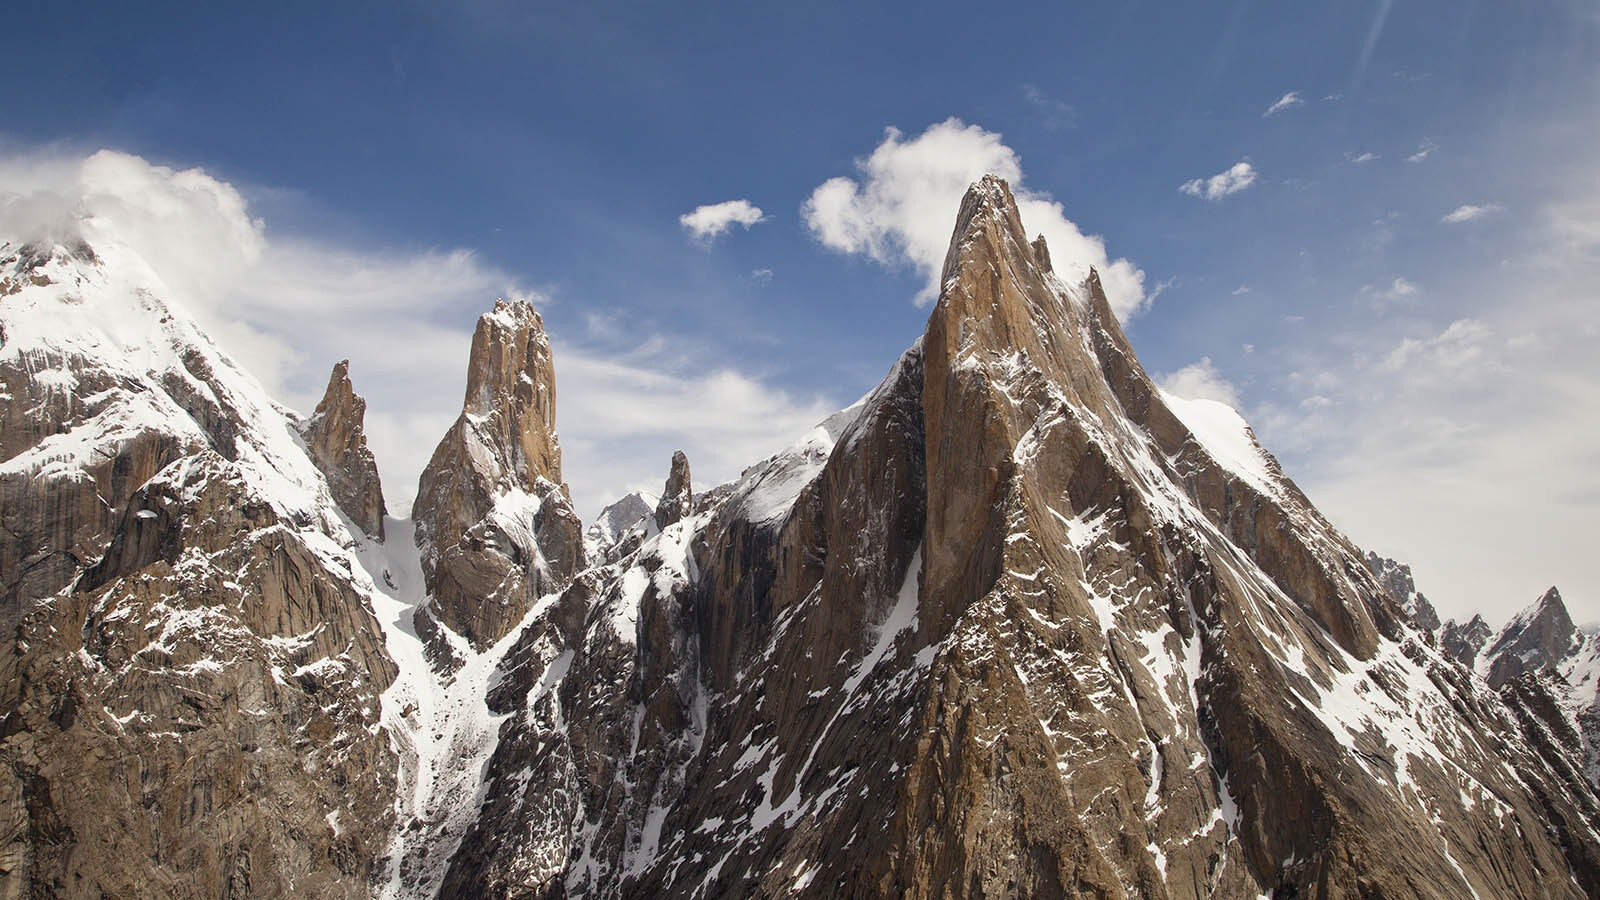 The infamous Trango Towers of the Himalaya.